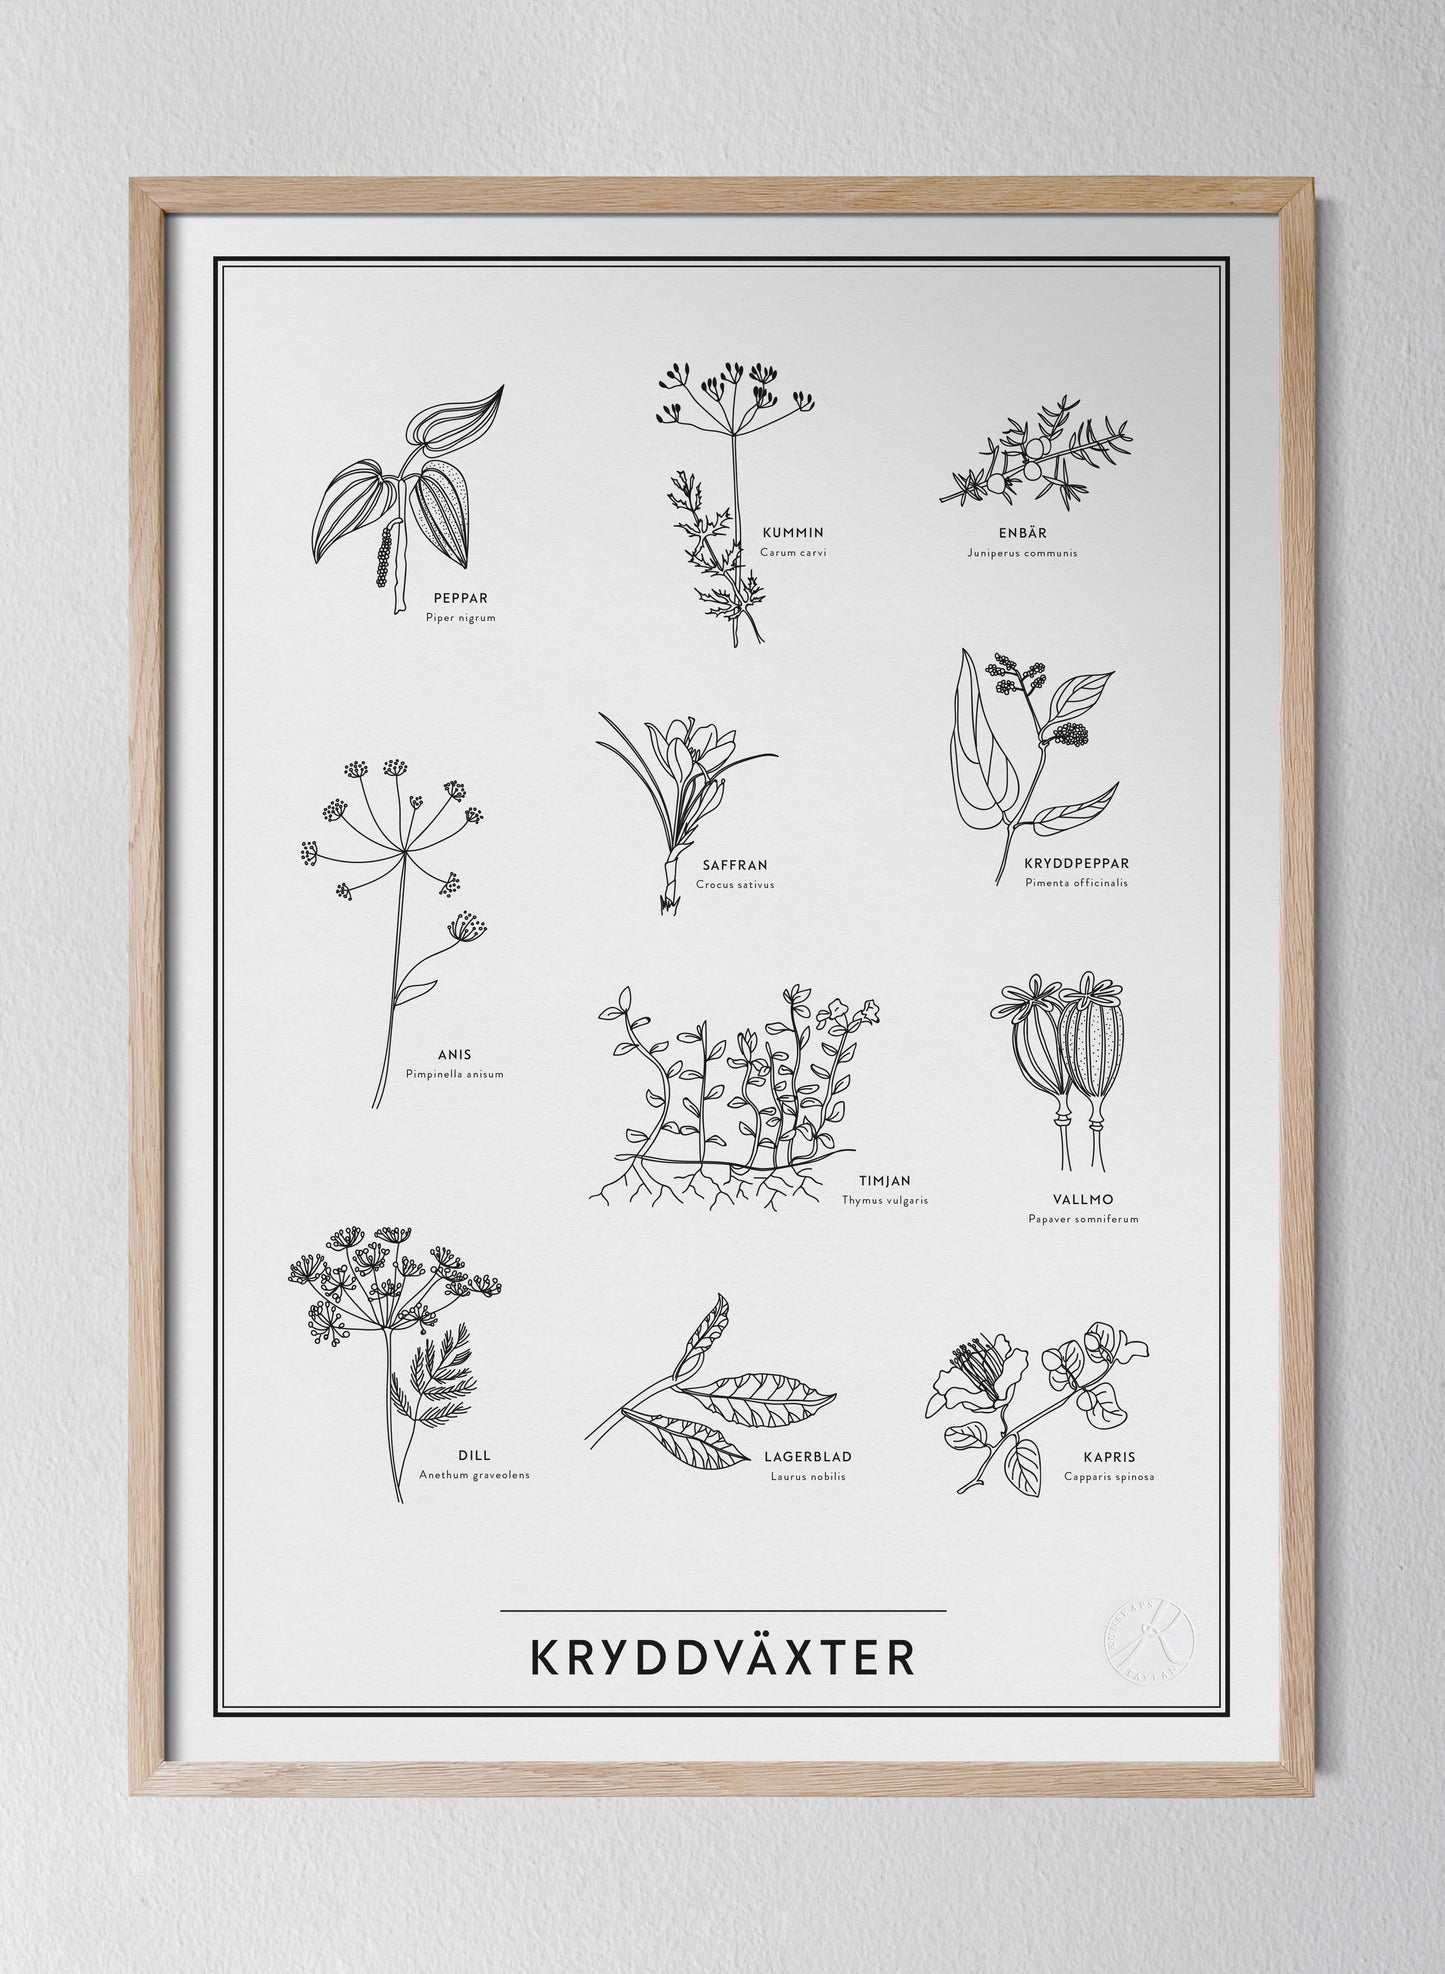 Kryddväxter - Herbs in Swedish